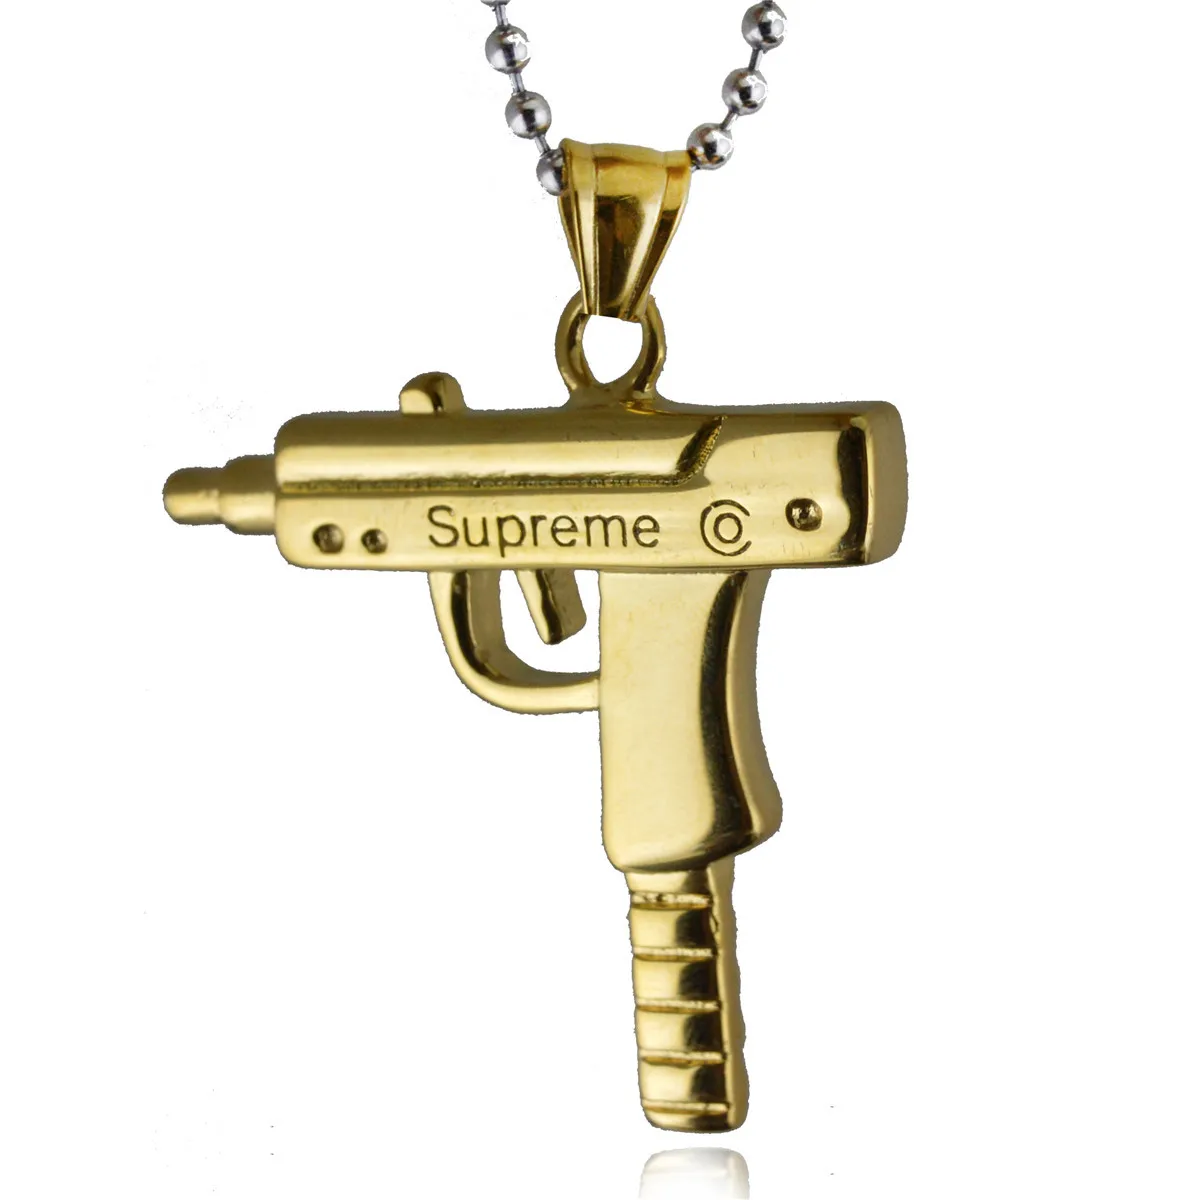 

Uzi submachine gun machine gun pendant fashion jewelry necklace for men and women, As the picture show